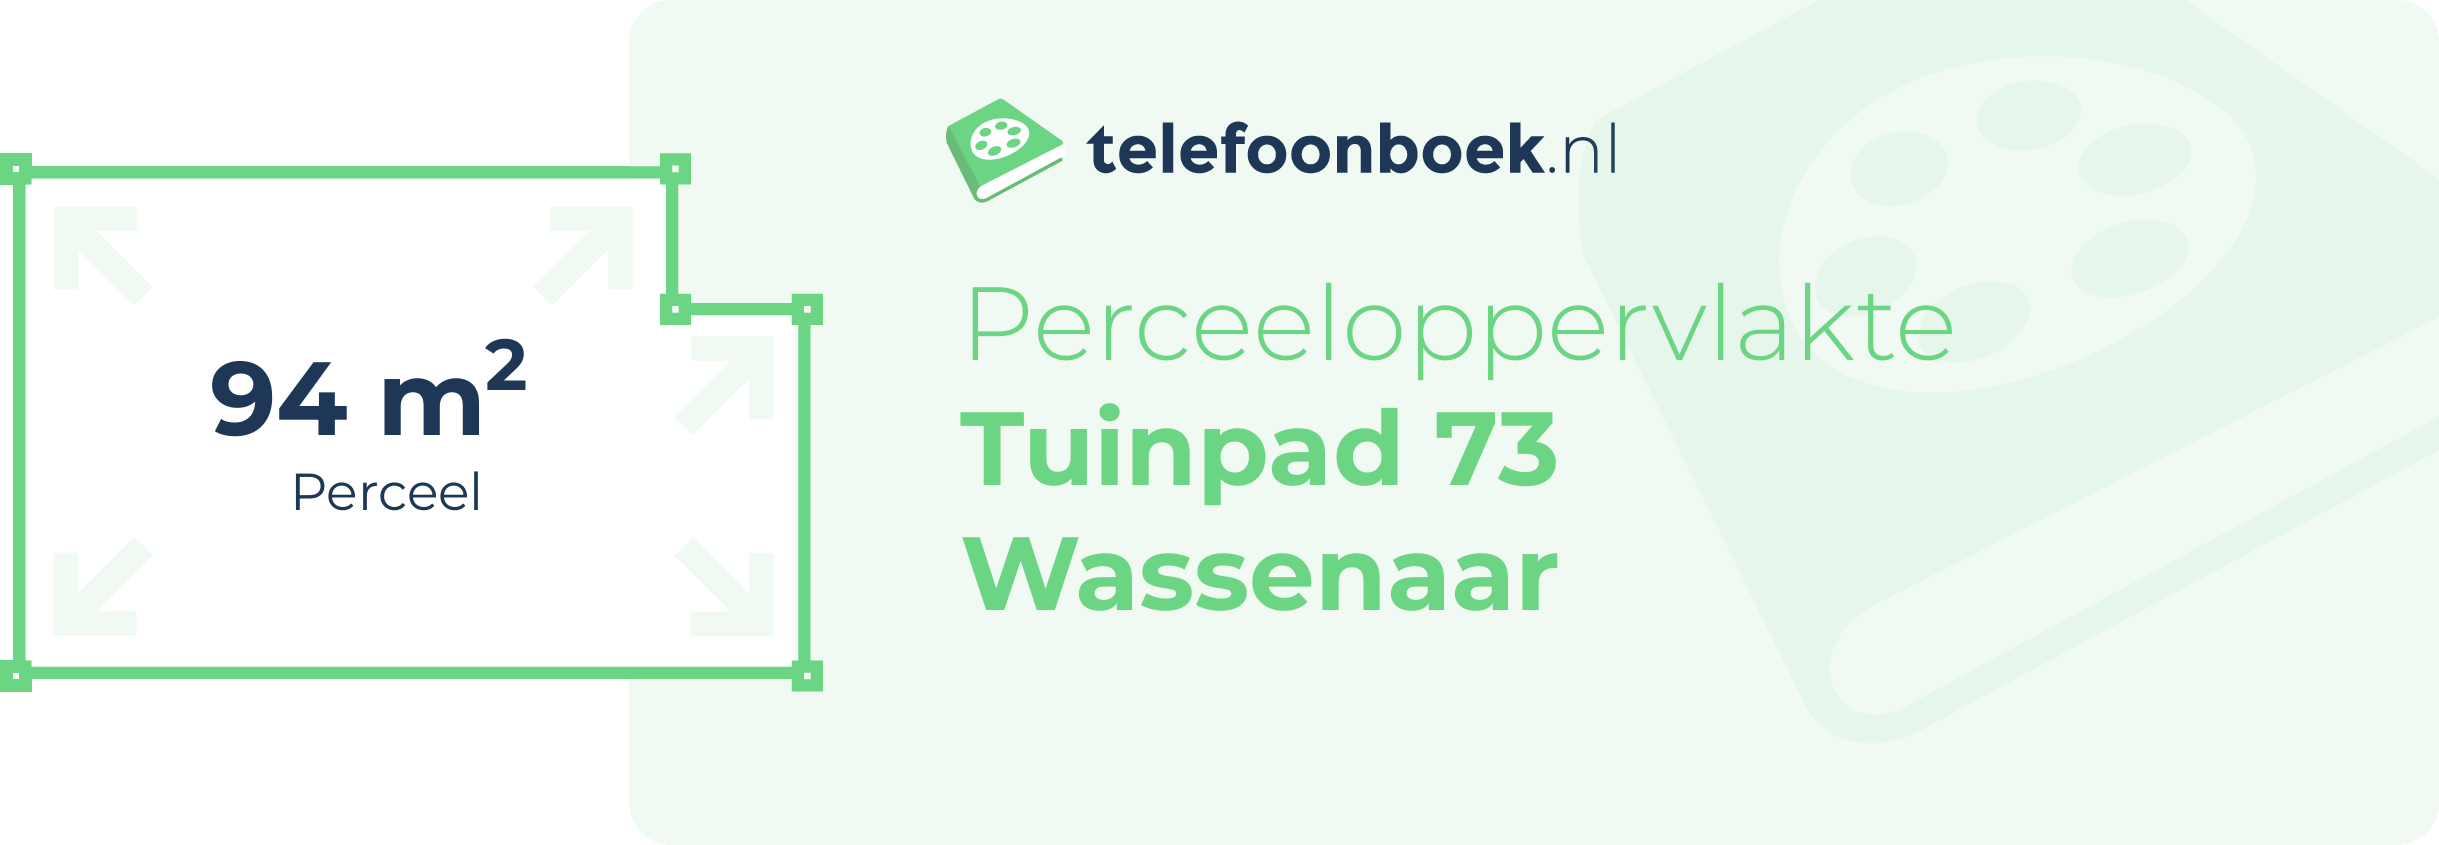 Perceeloppervlakte Tuinpad 73 Wassenaar